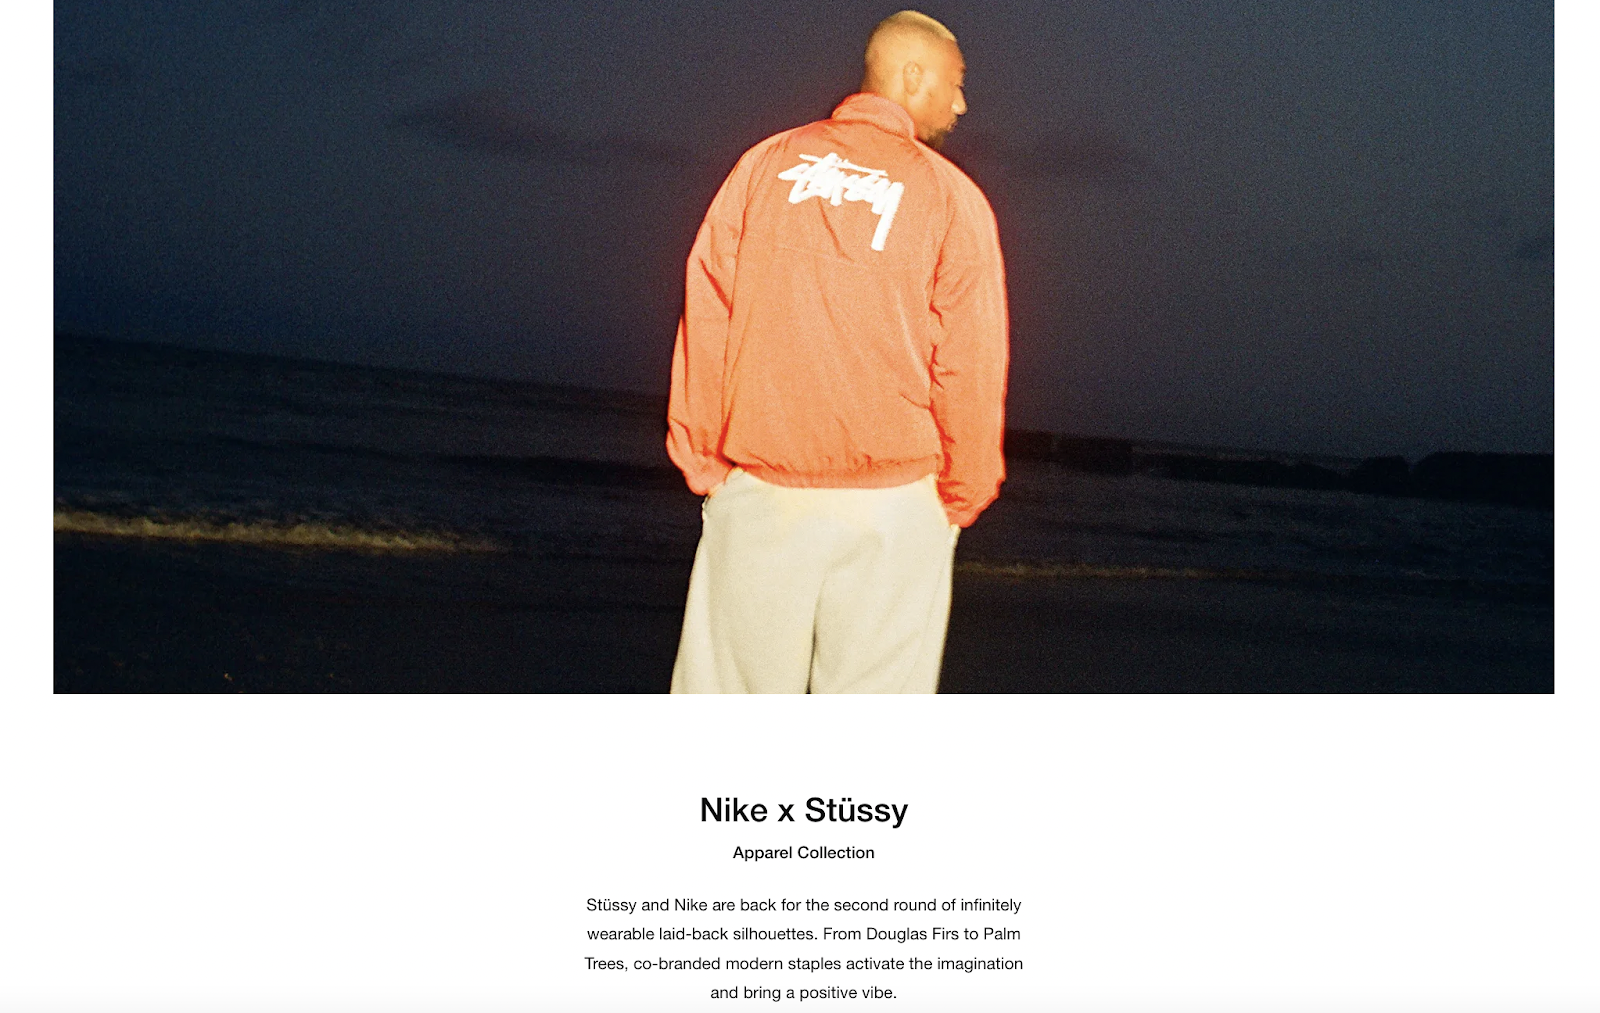 Nike x Stüssy partnership